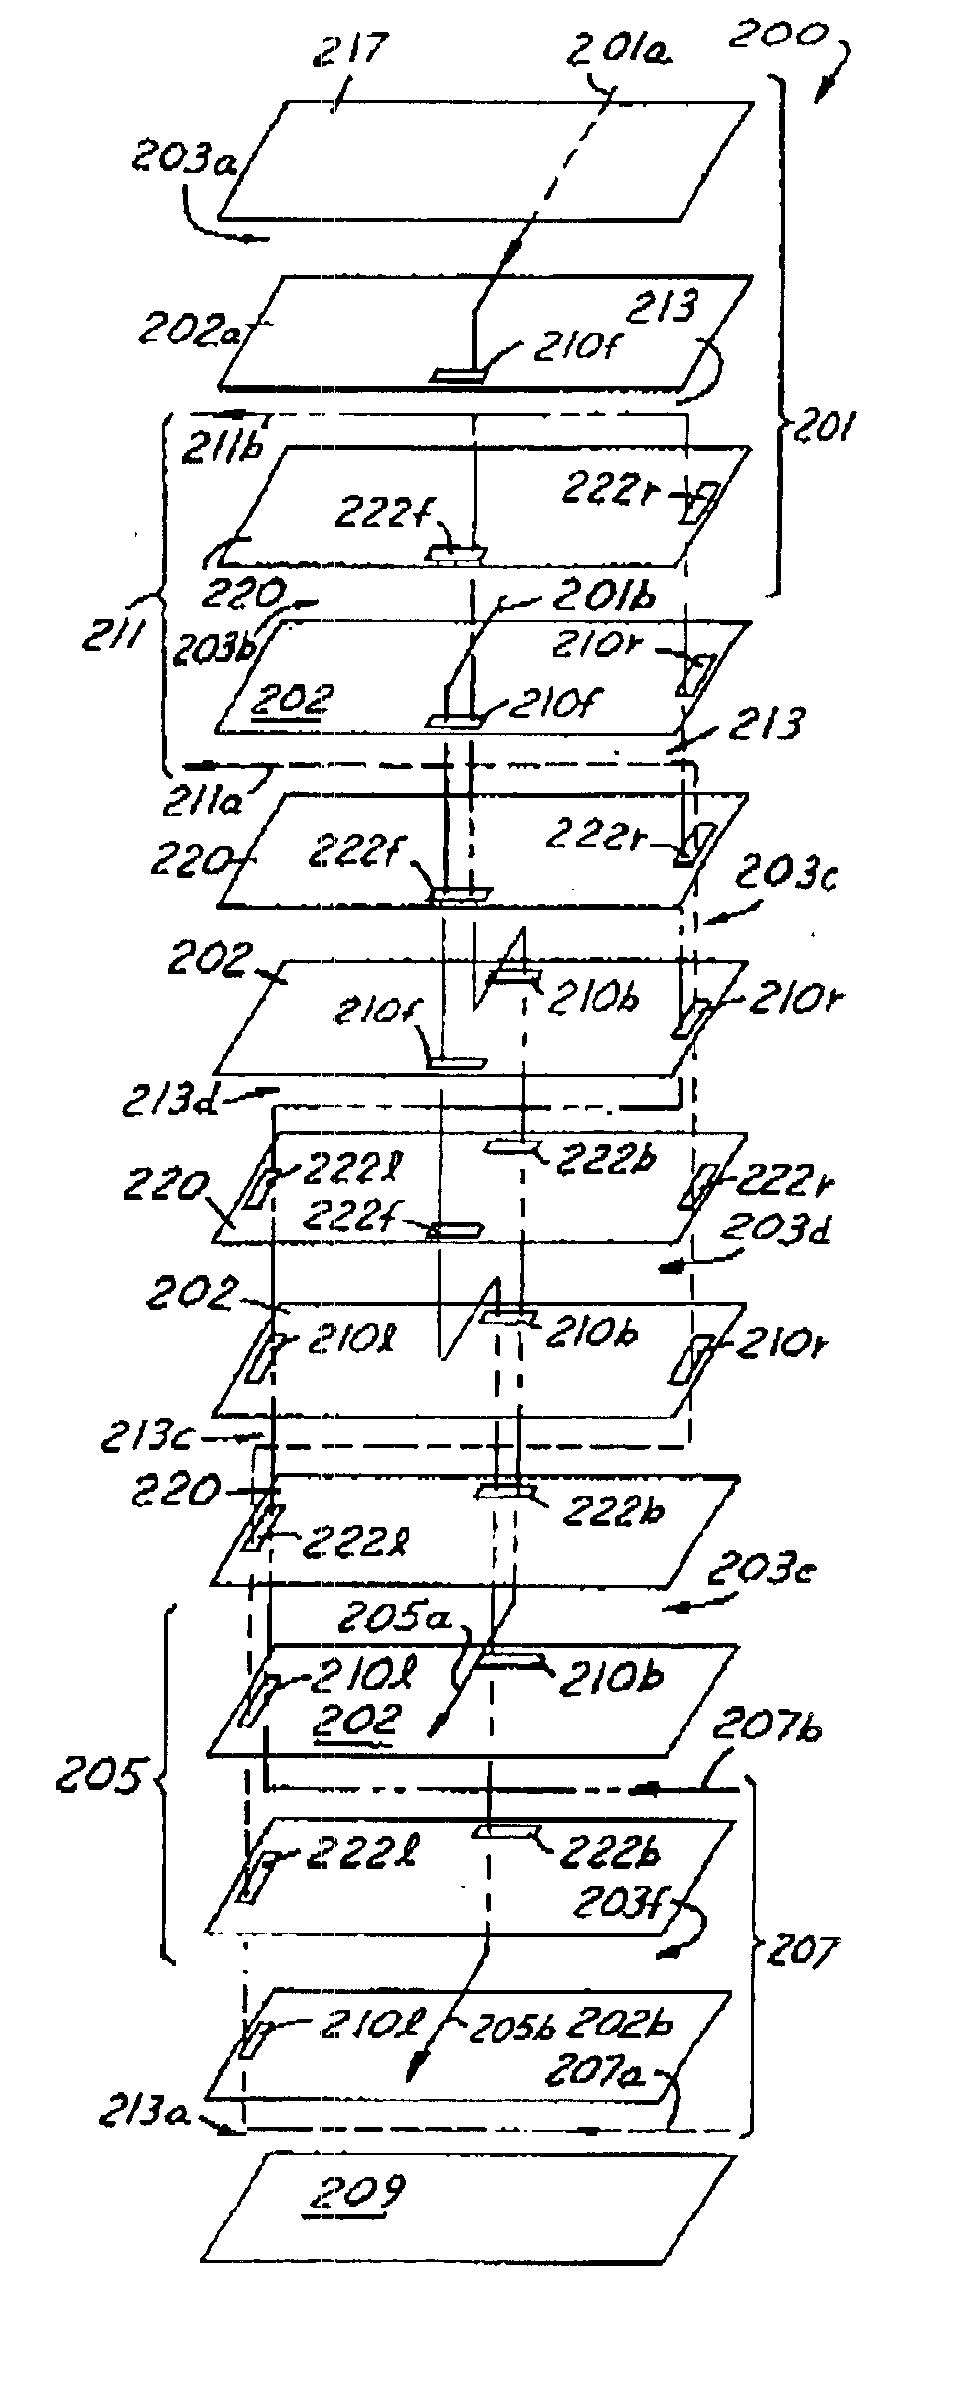 Plate-frame heat exchange reactor with serial cross-flow geometry